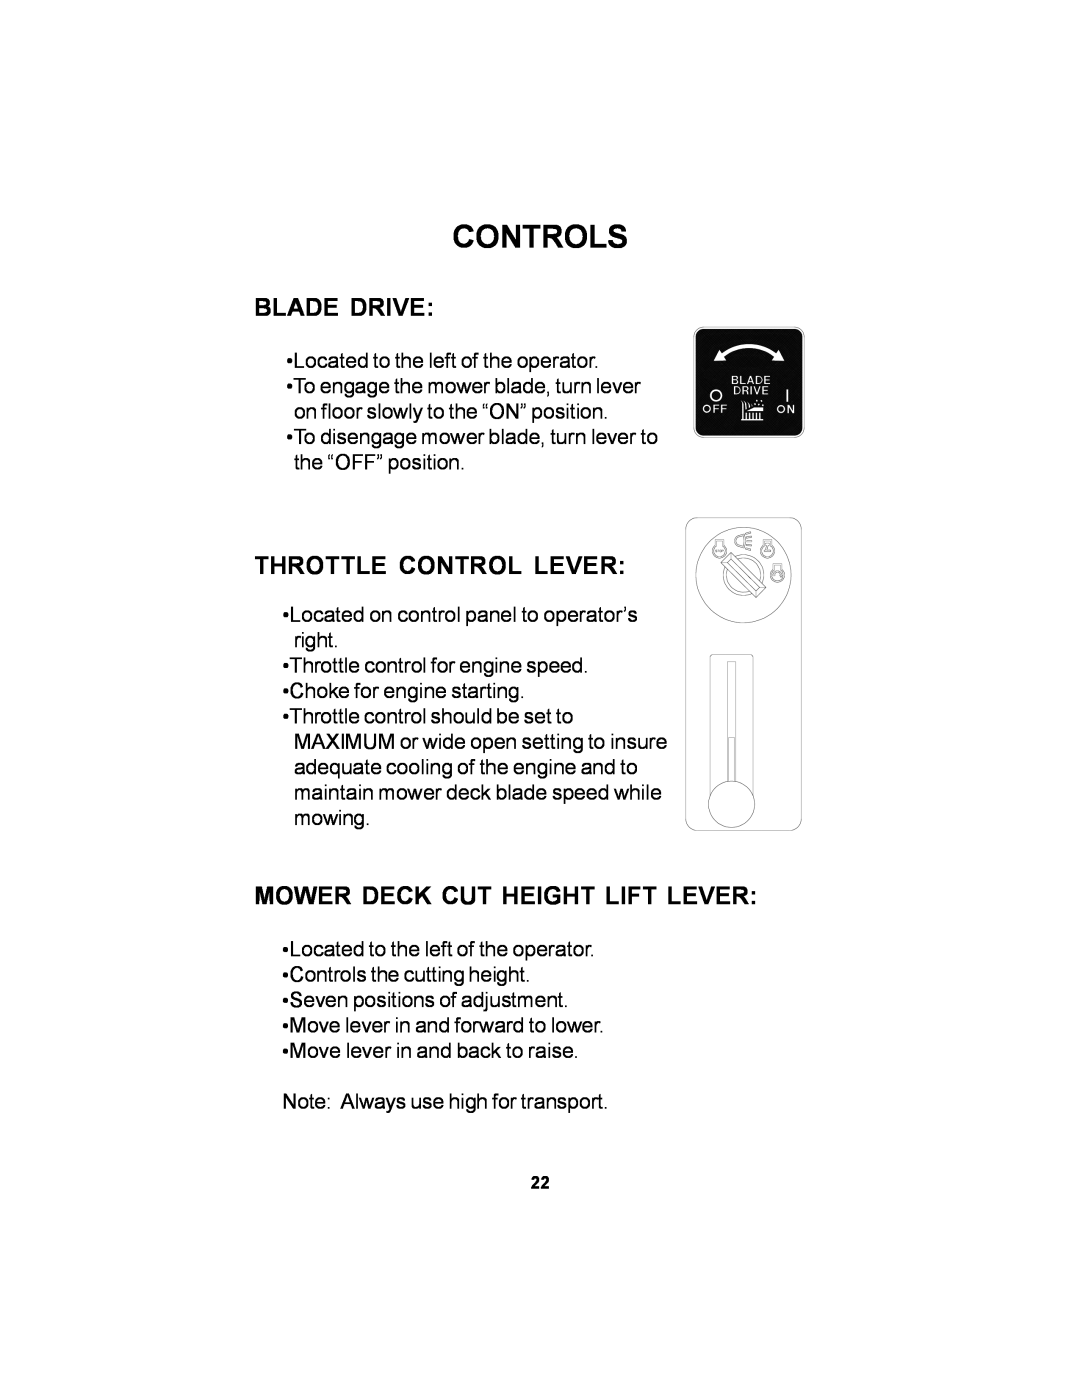 Dixon 14295-1005 manual Blade Drive, Throttle Control Lever, Mower Deck Cut Height Lift Lever, Controls 